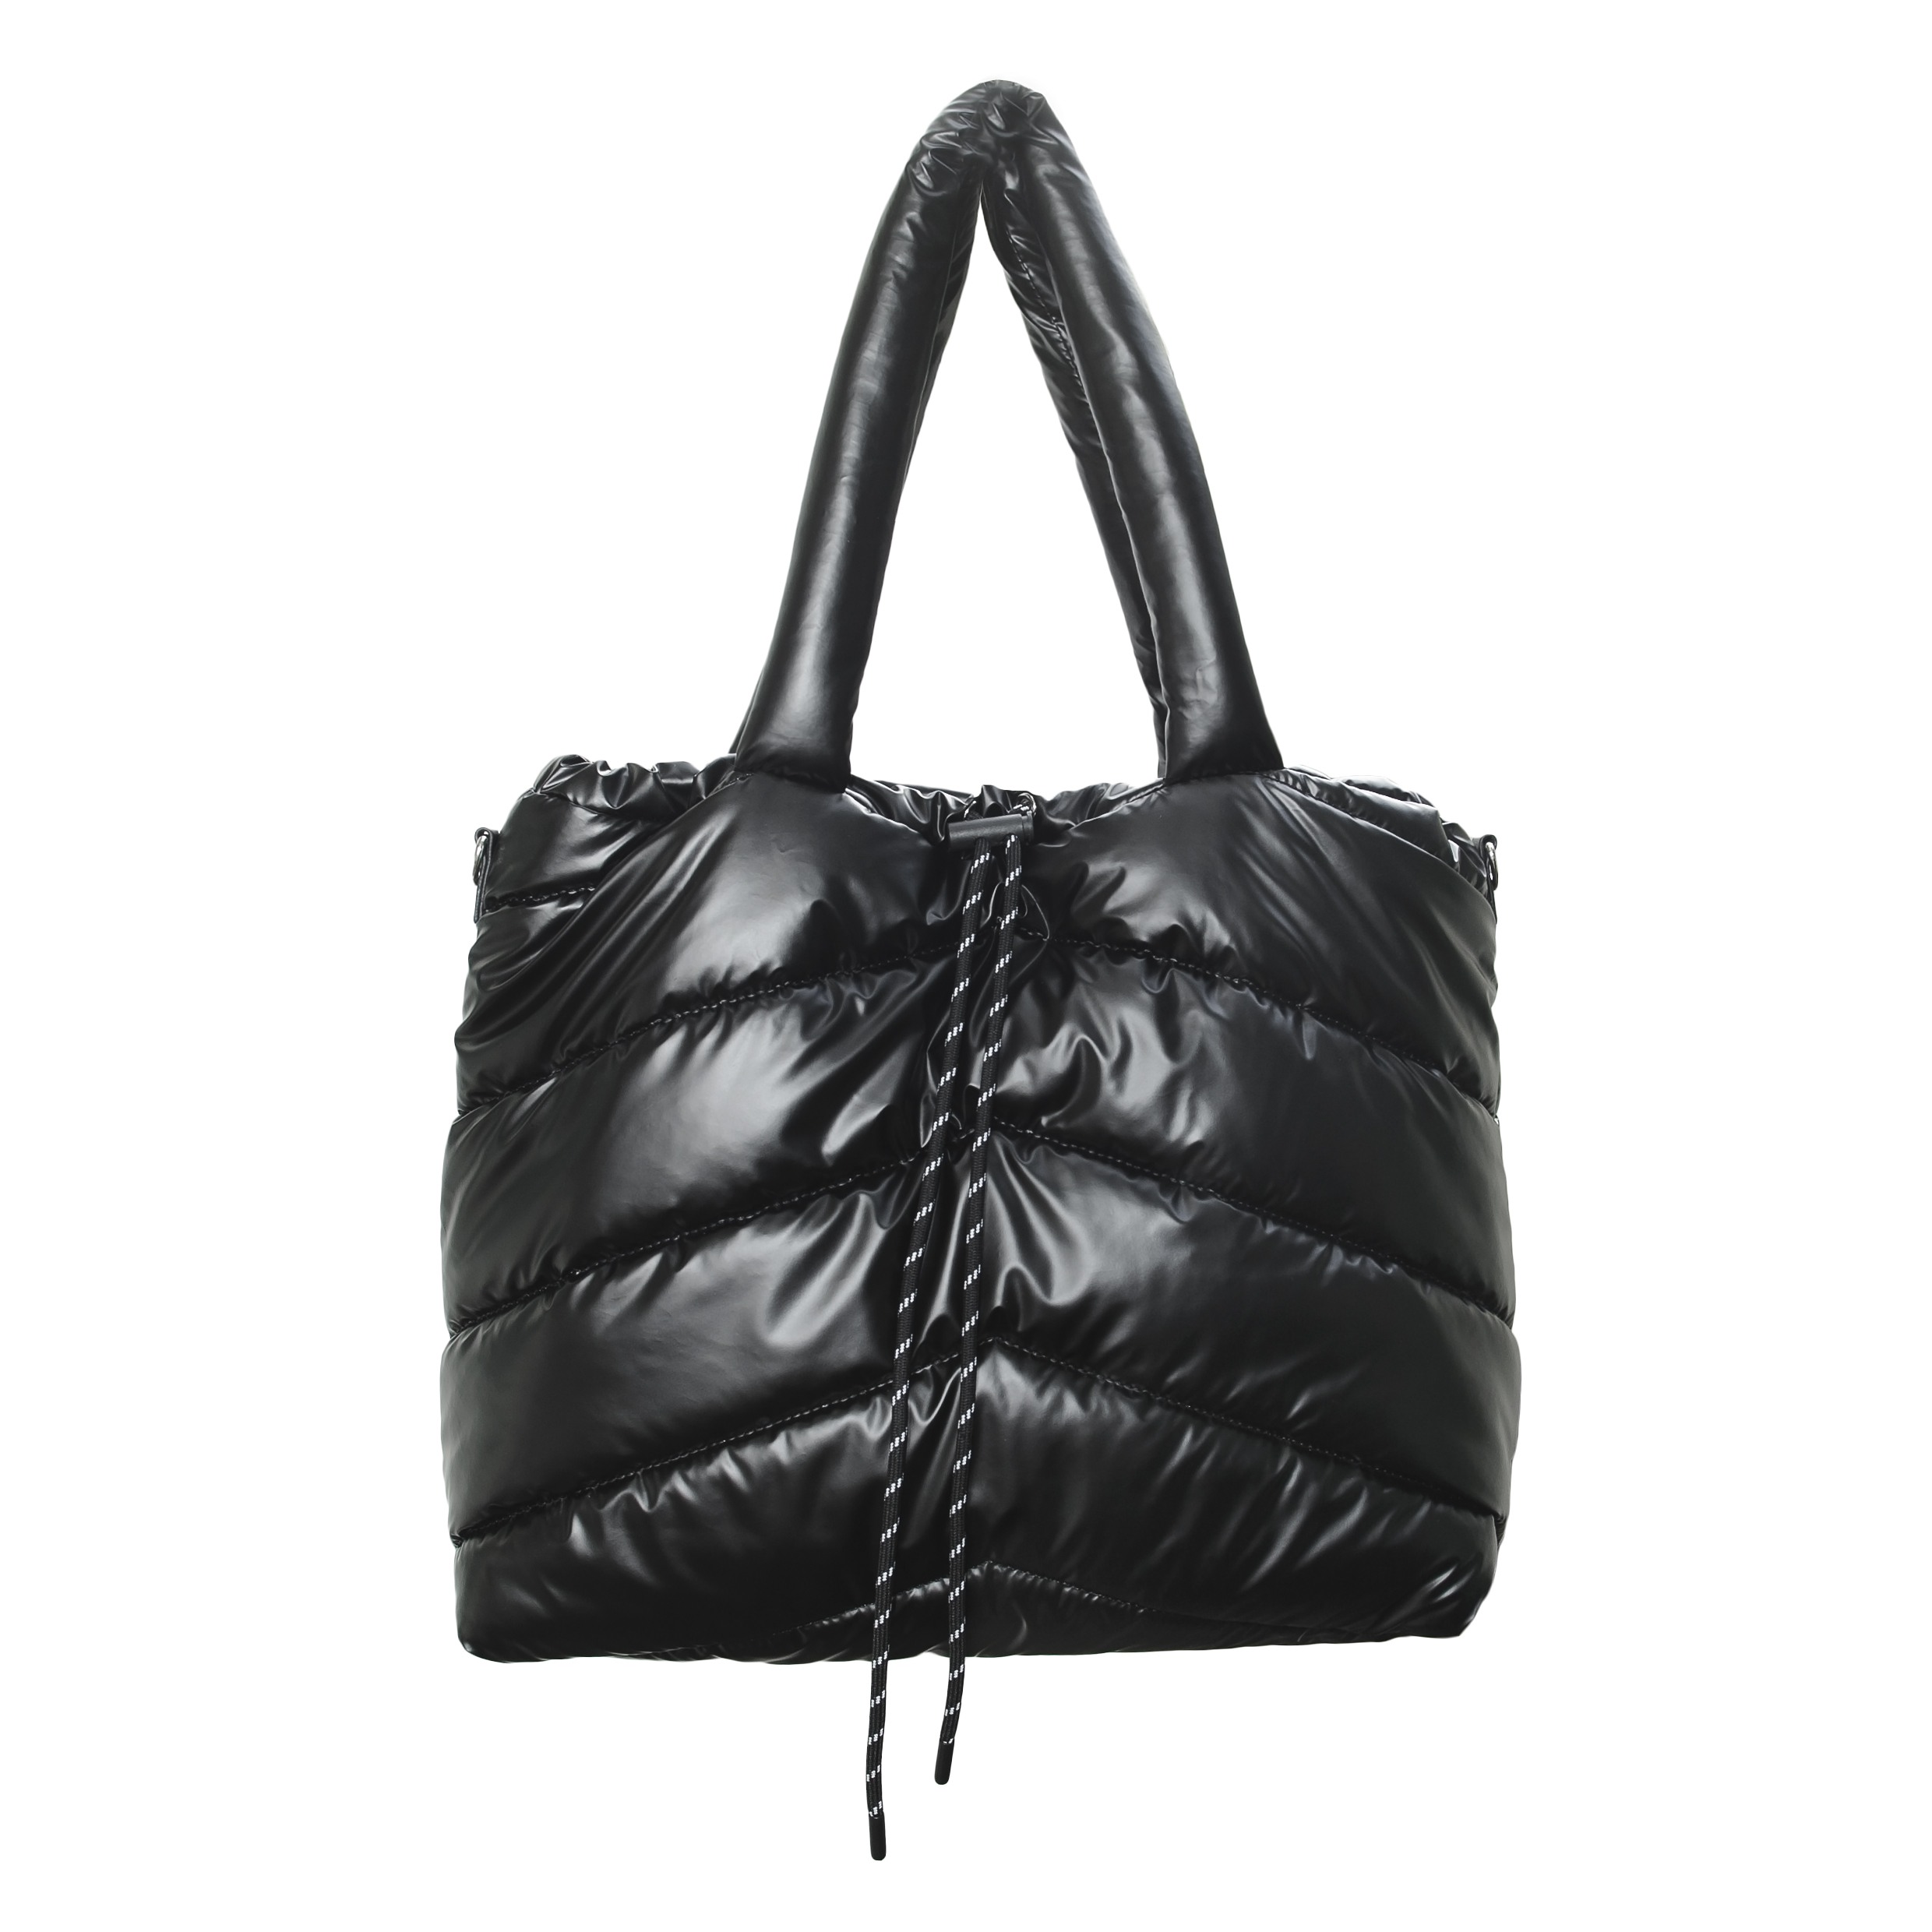 Freja NYC: Preorder the Caroline Bag | Milled